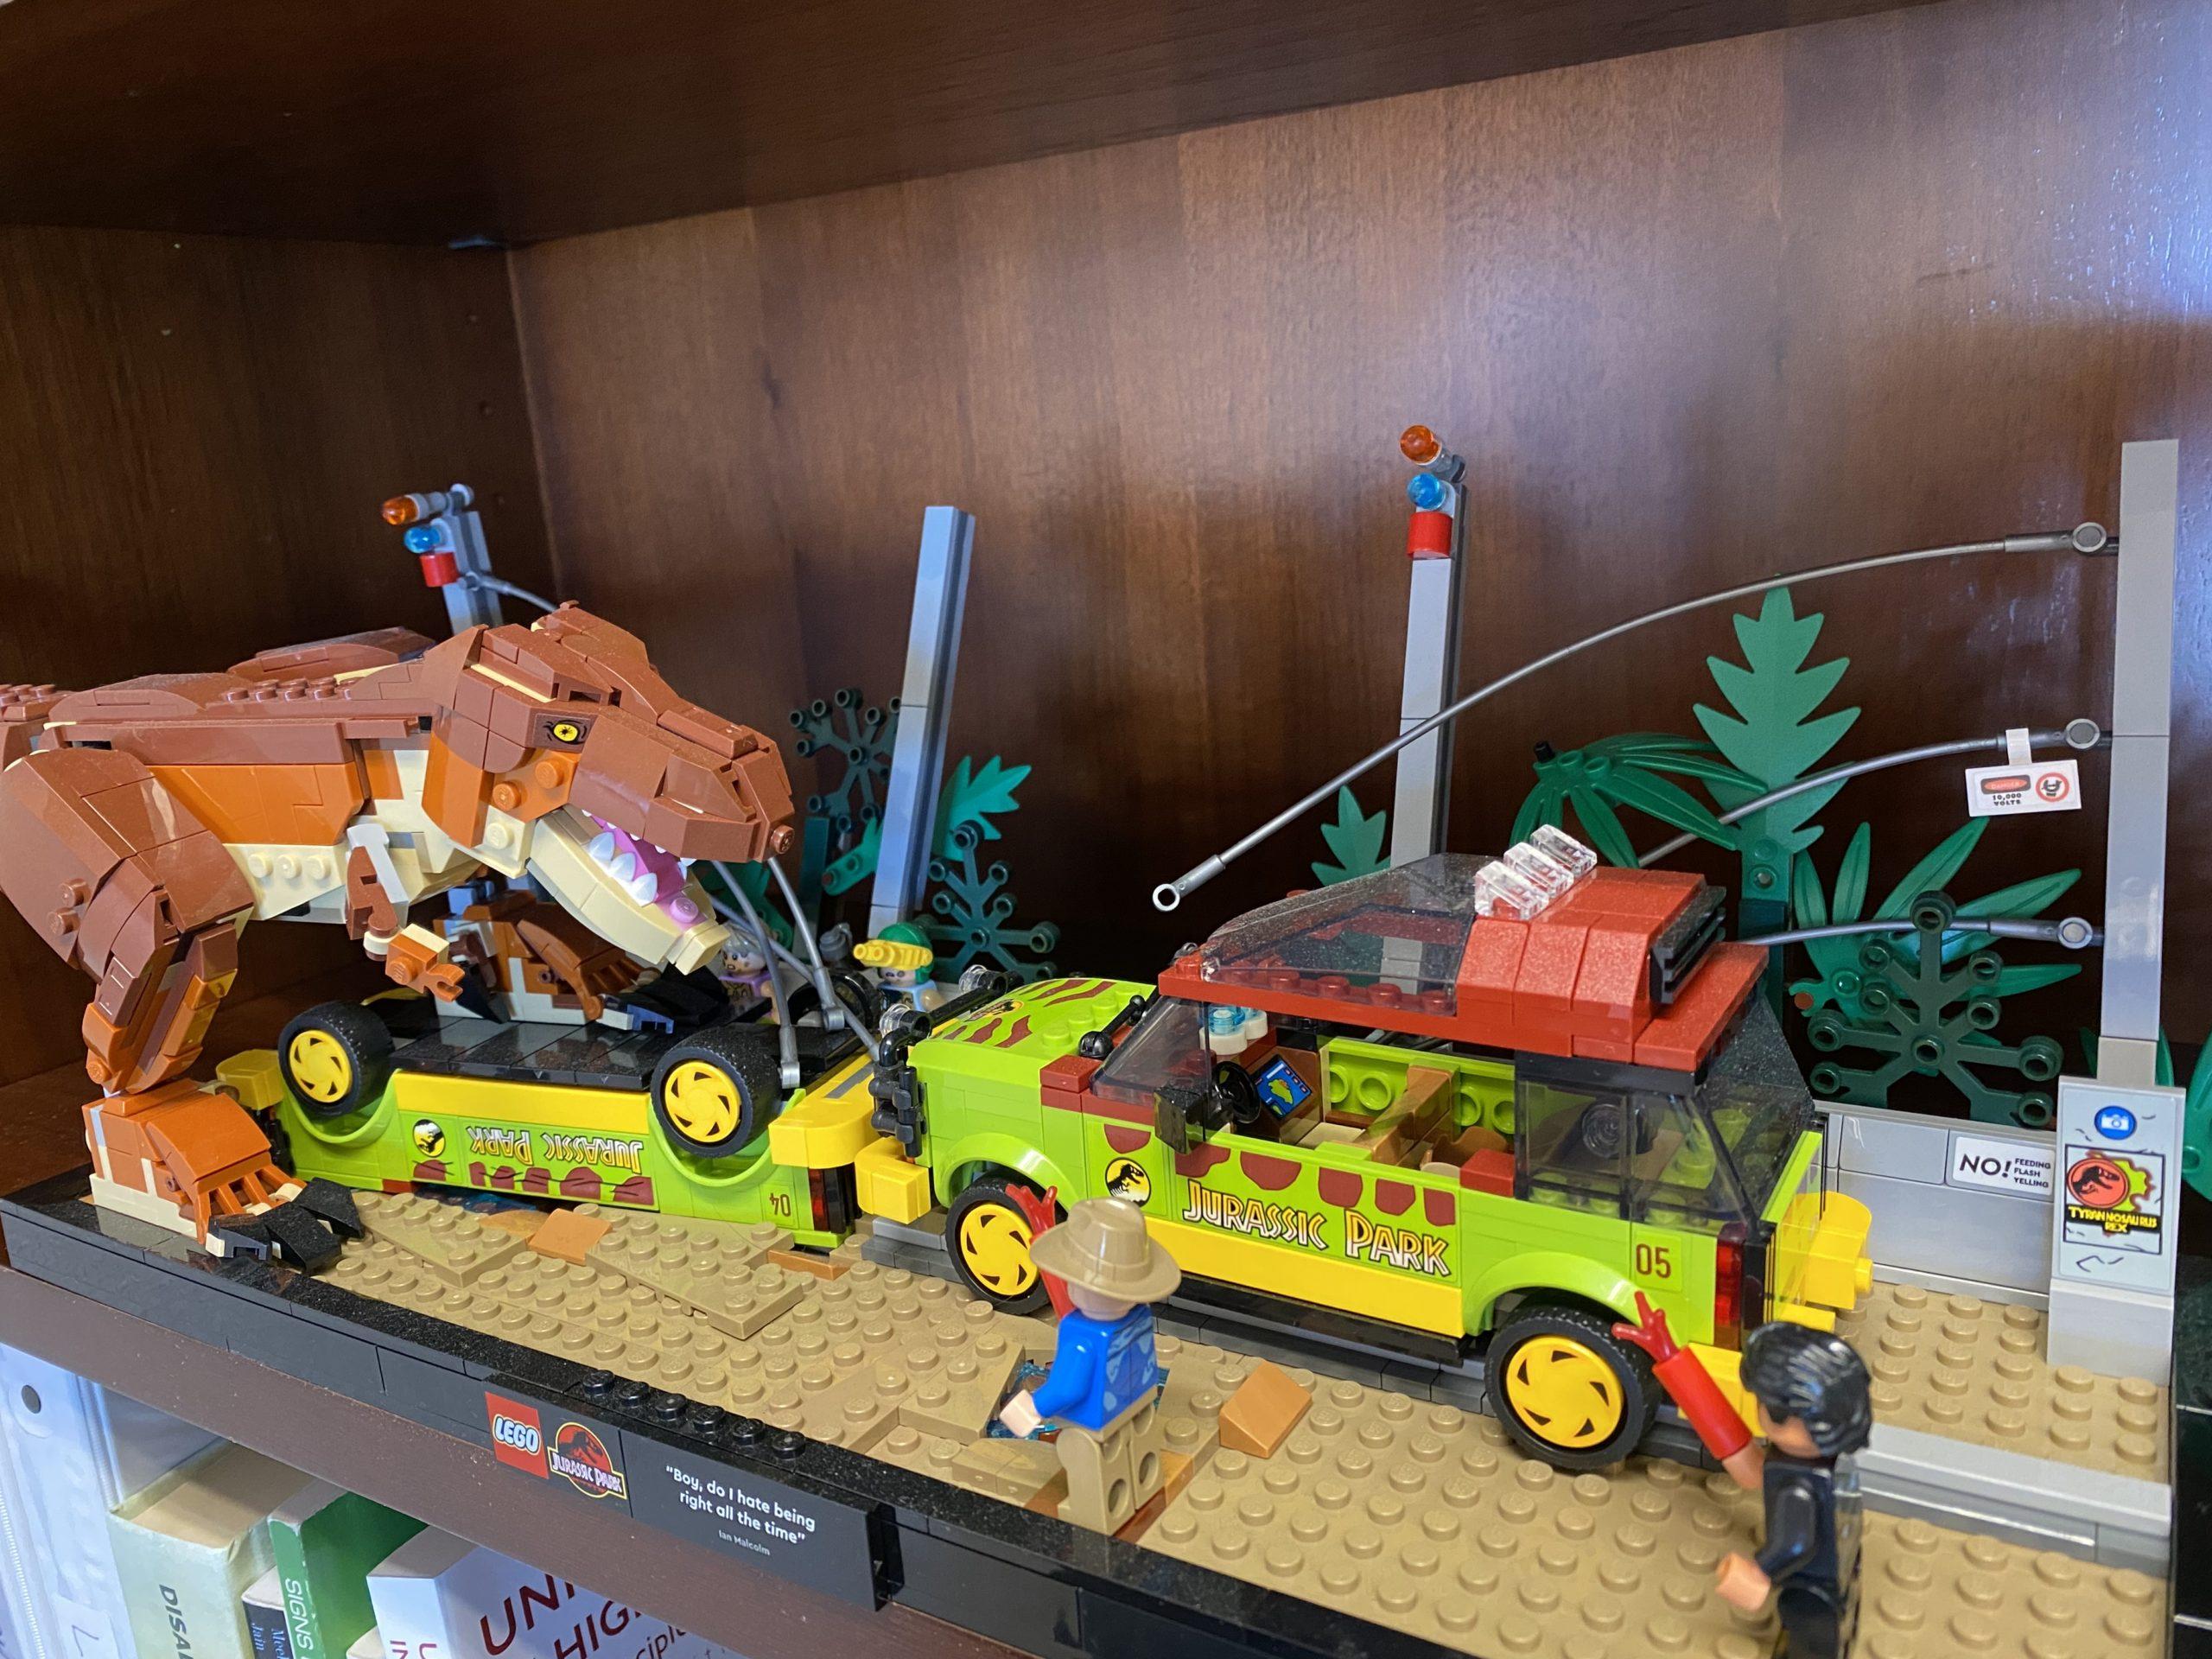 A closer view of the Lego T-Rex Escape Lego set.